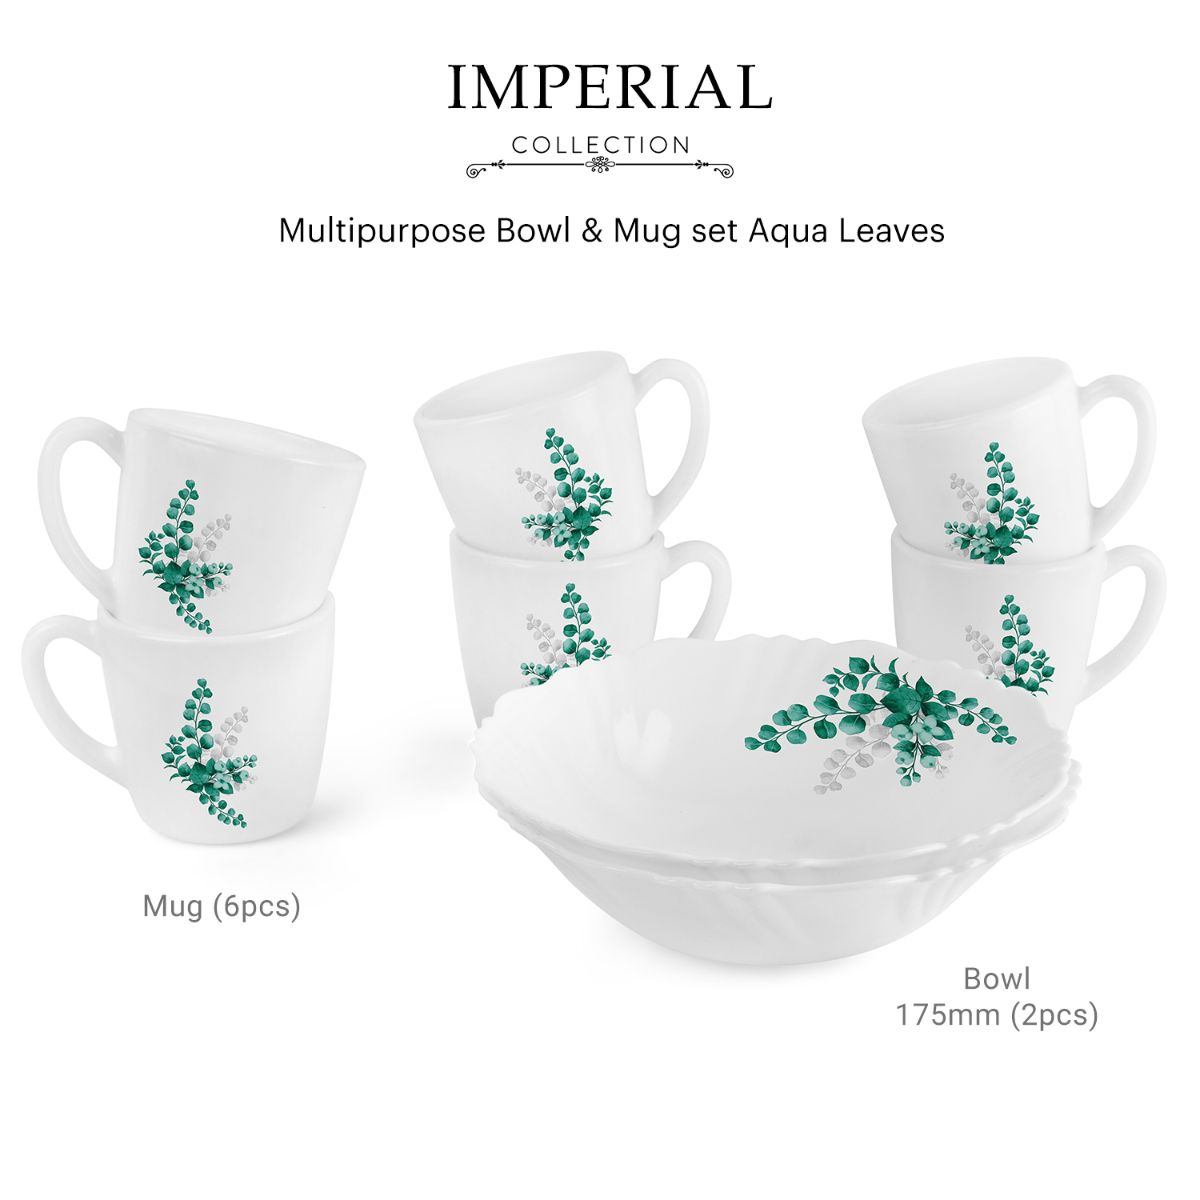 Imperial Series Quick Bite Bowl & Mug Gift set, 8 Pieces Aqua Leaves / 8 Pieces